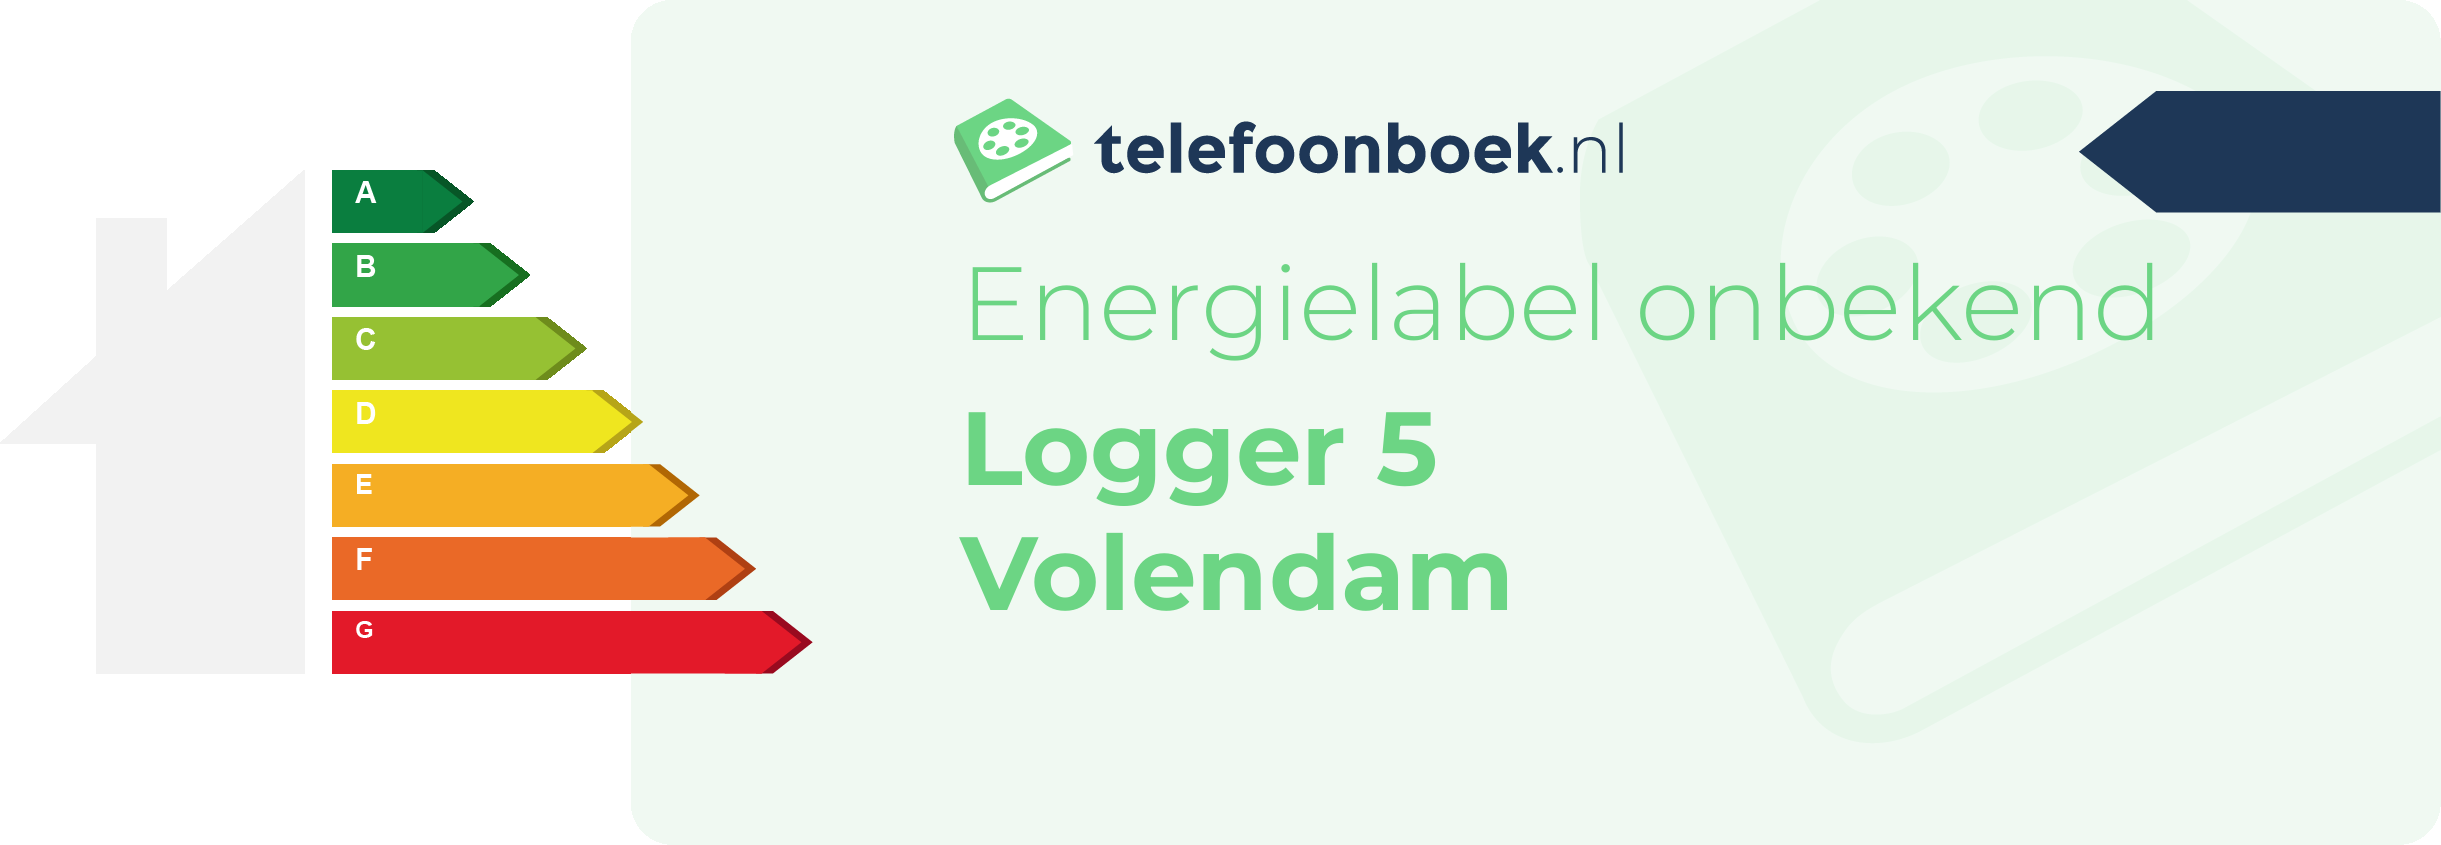 Energielabel Logger 5 Volendam